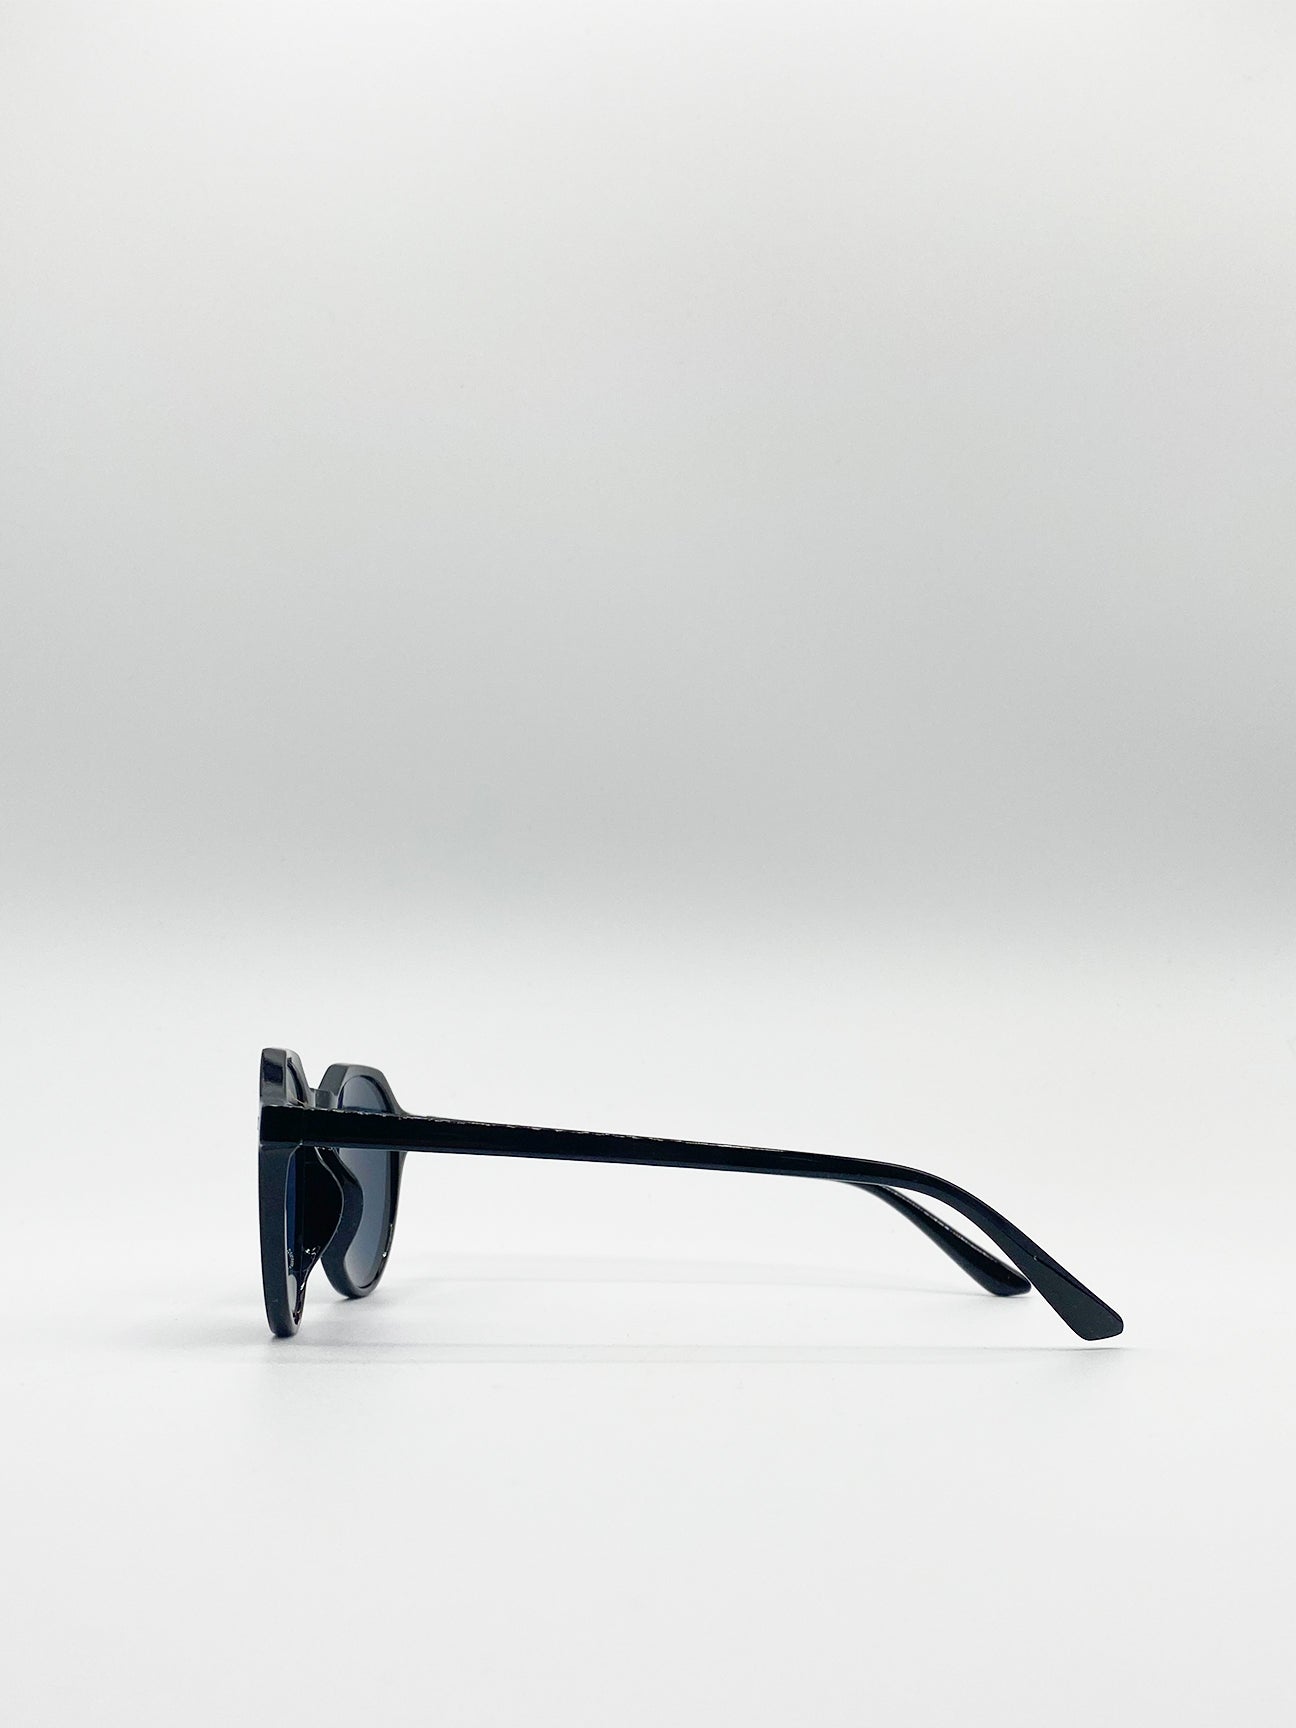 Black Classic Preppy Sunglasses With Key Hole Nosebridge